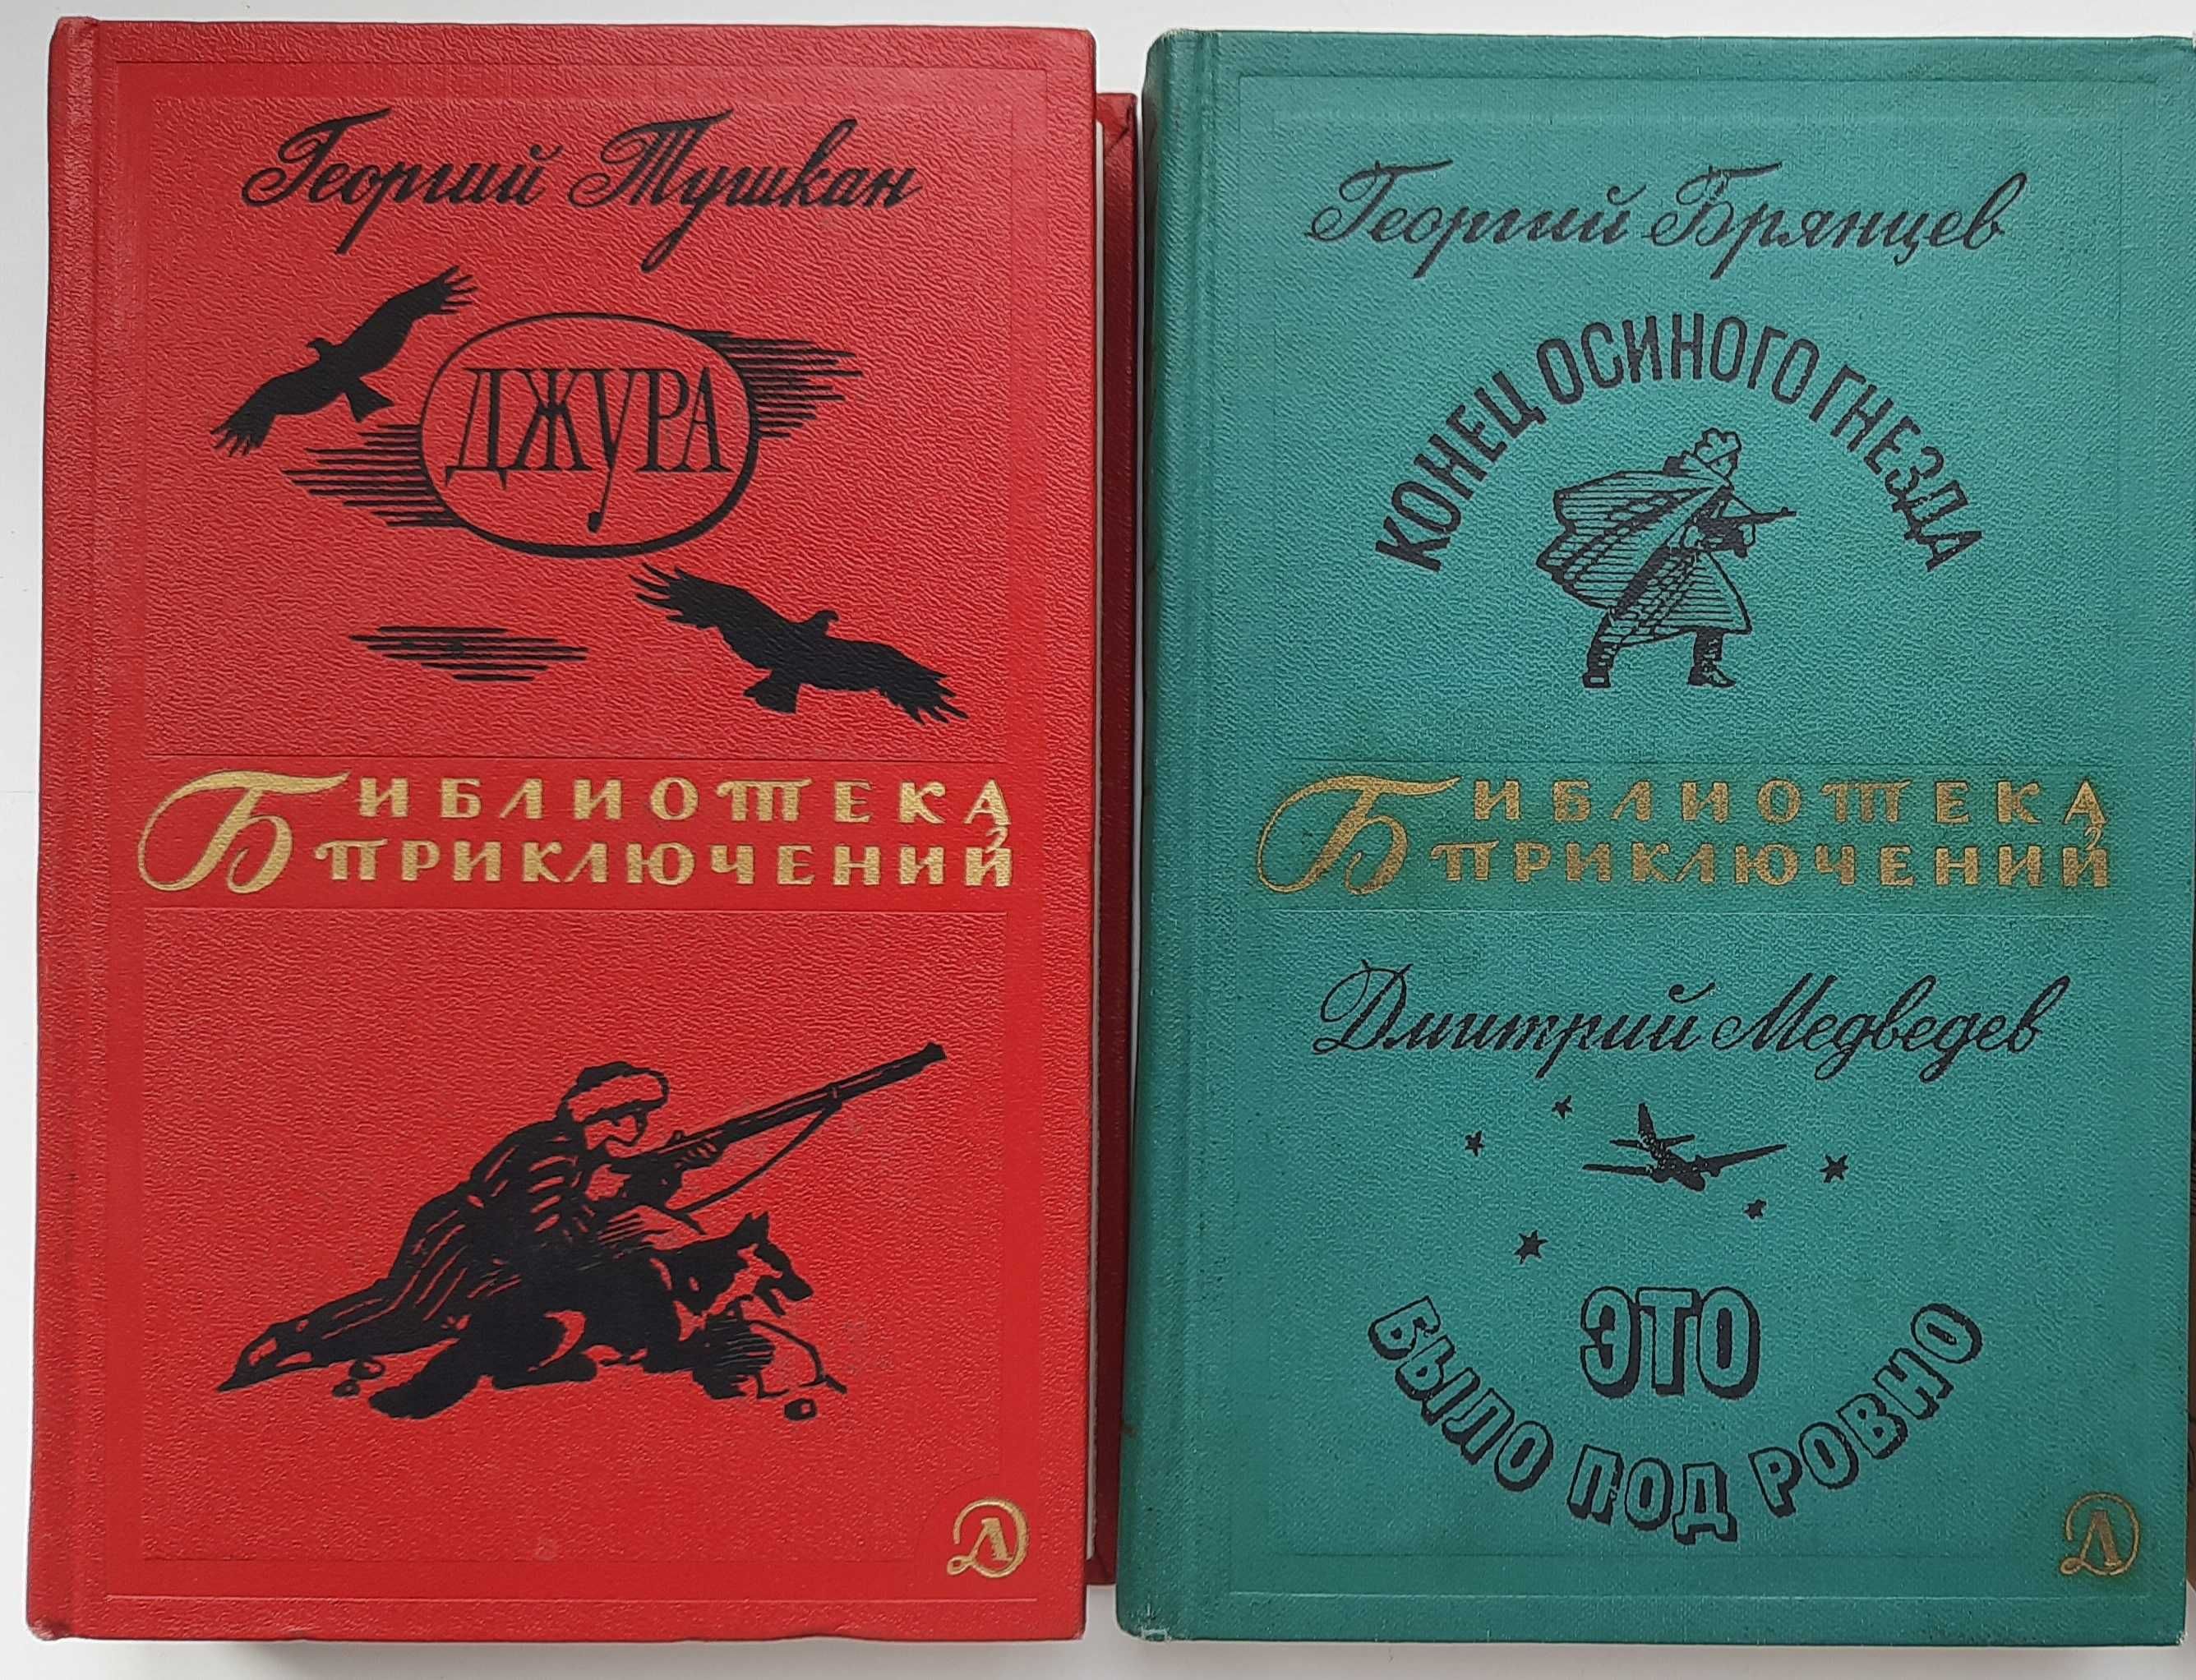 Тушкан, Уэллс и др. Библиотека приключений-2, 1960-е г, отд. тома